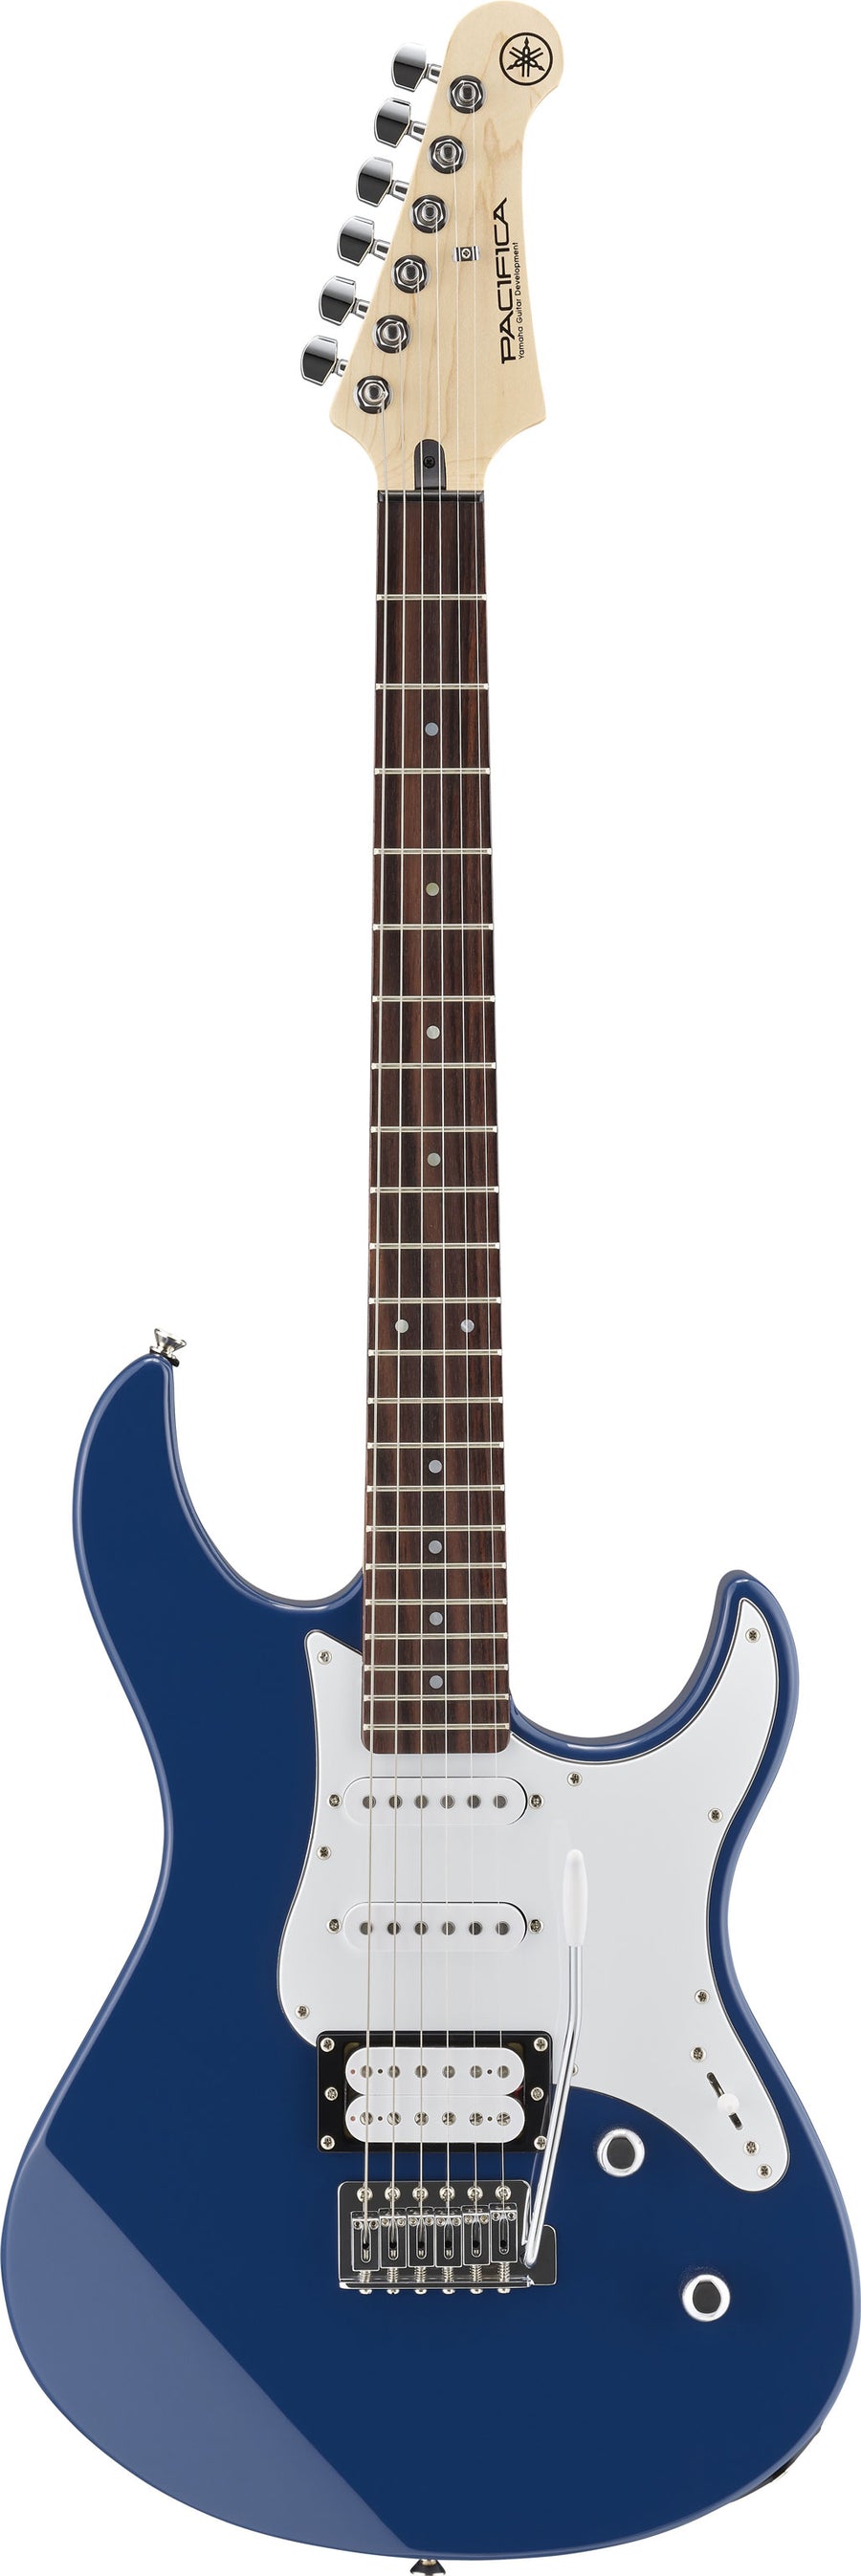 Yamaha PAC112V United Blue Double Cutaway Electric Guitar